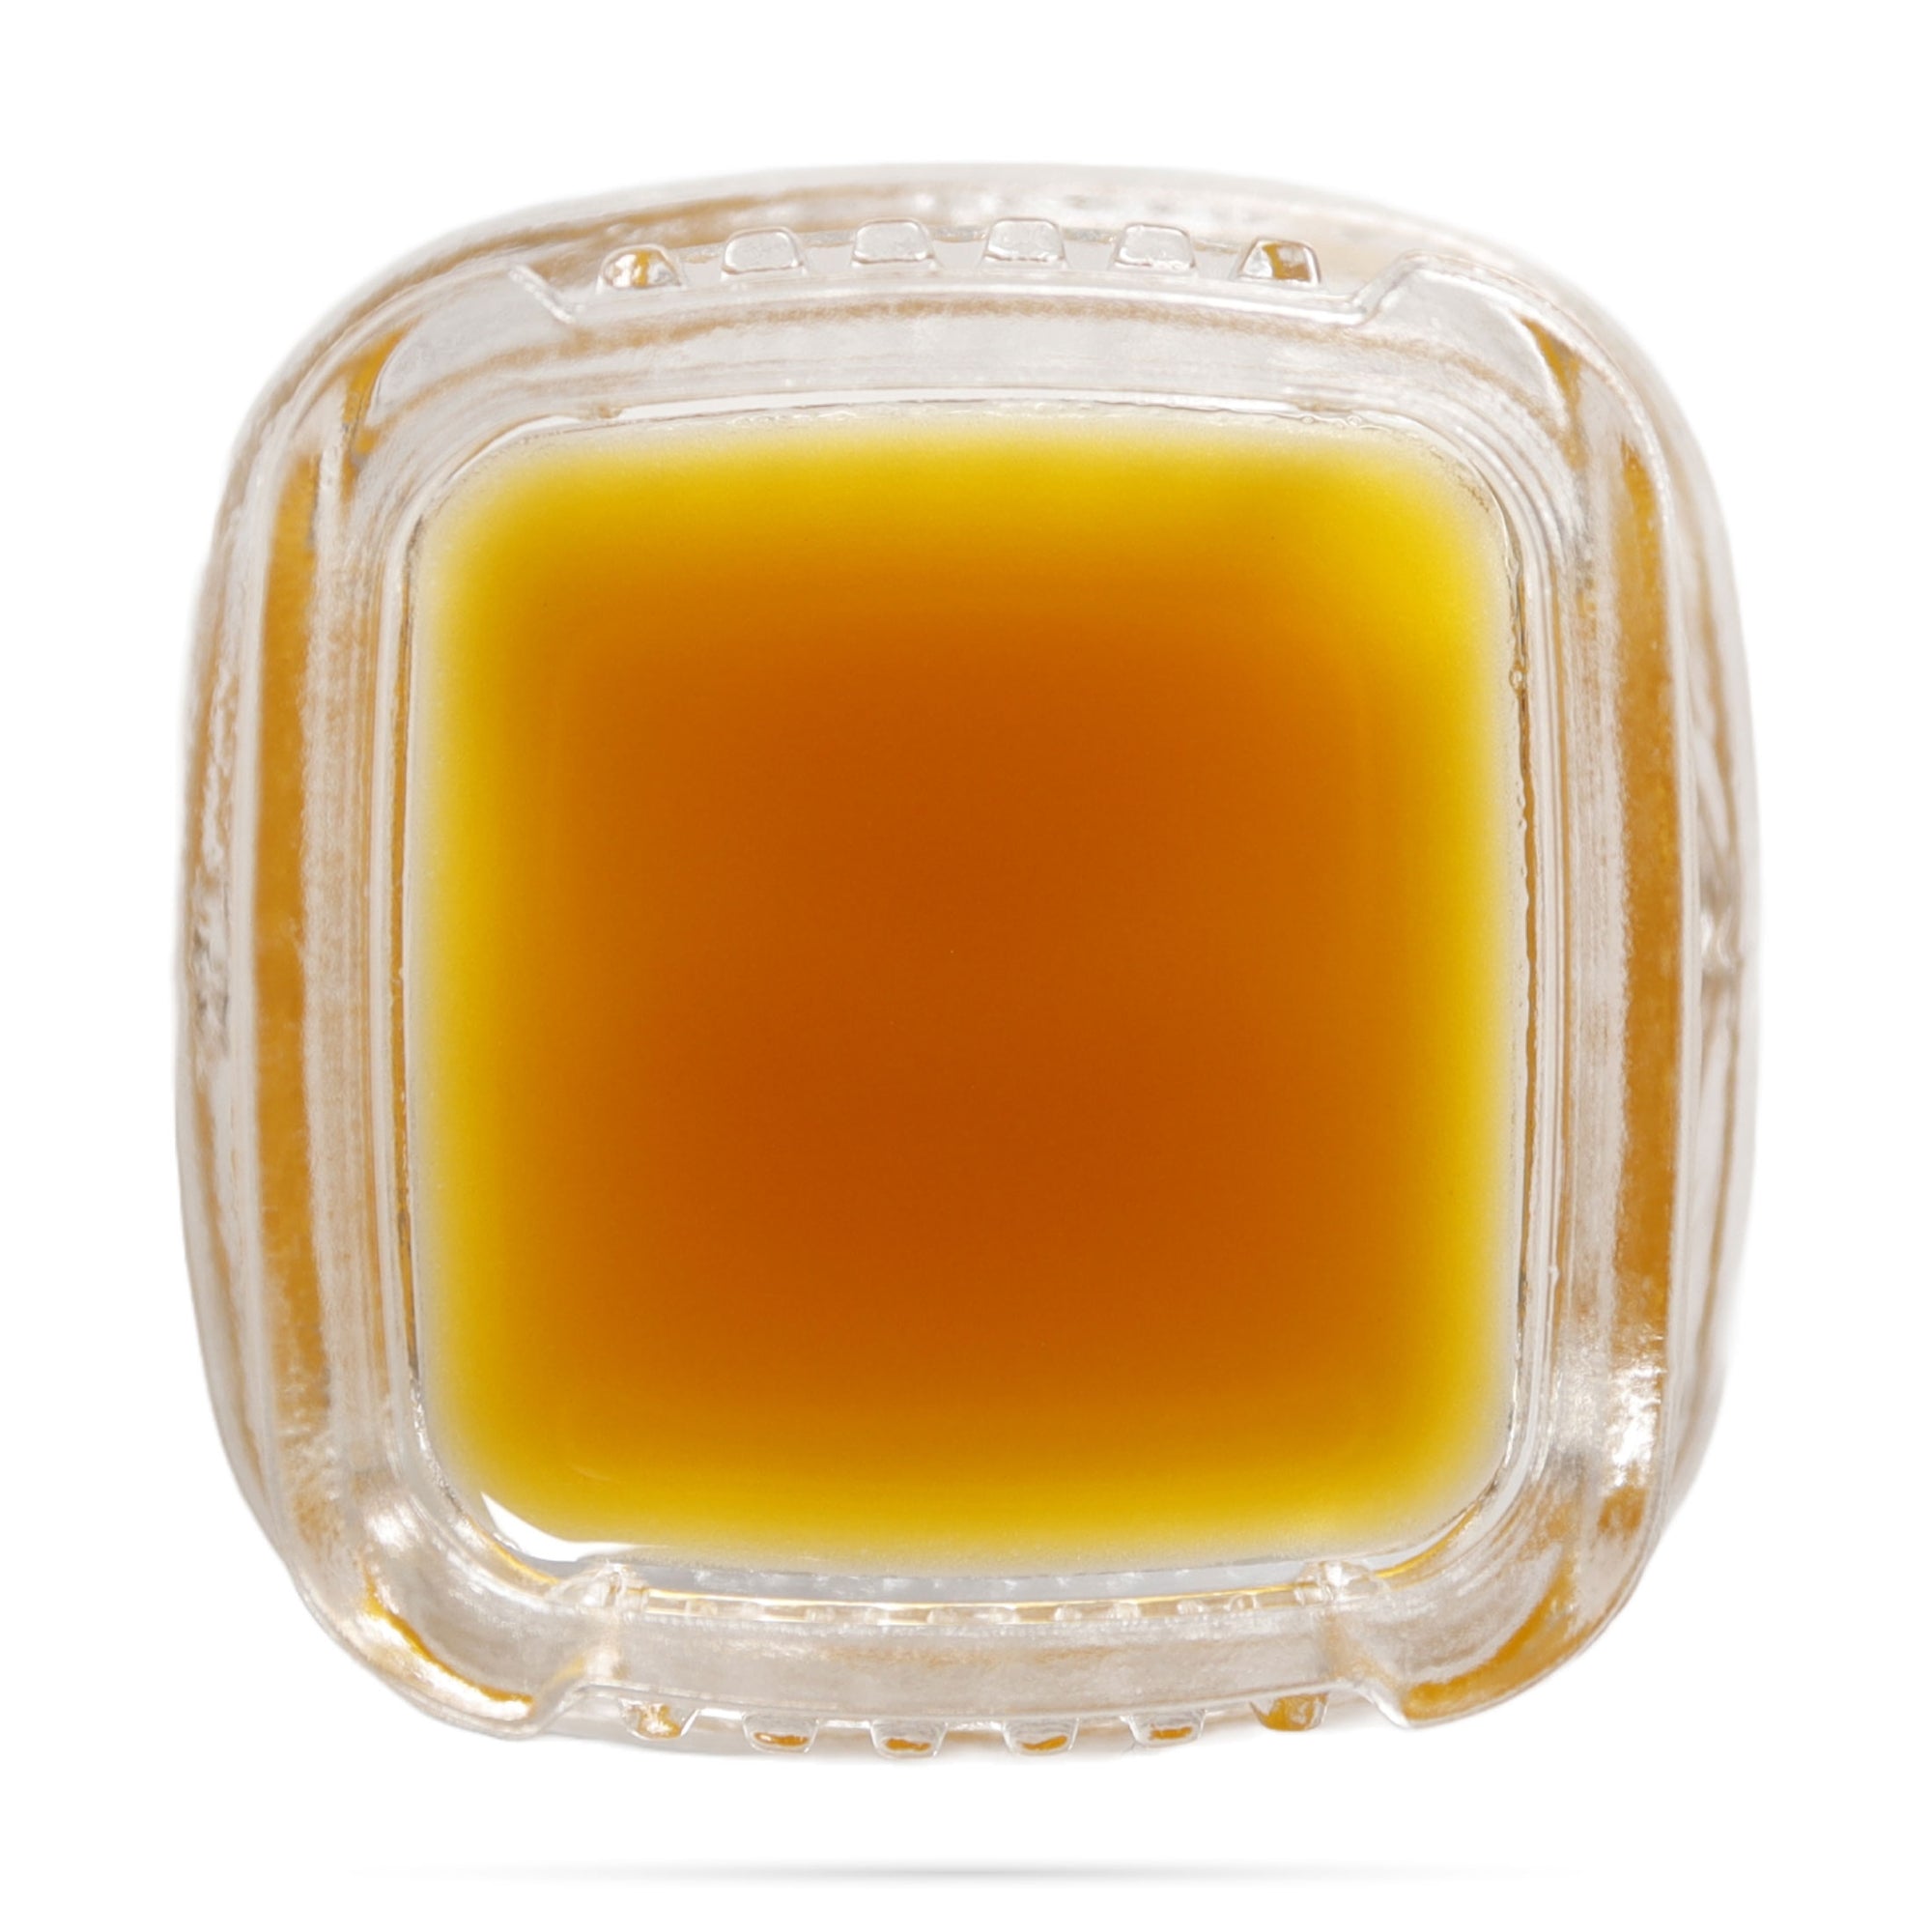 Image of Super Sour Space Candy CBD Live Resin 3.5 gram jar.